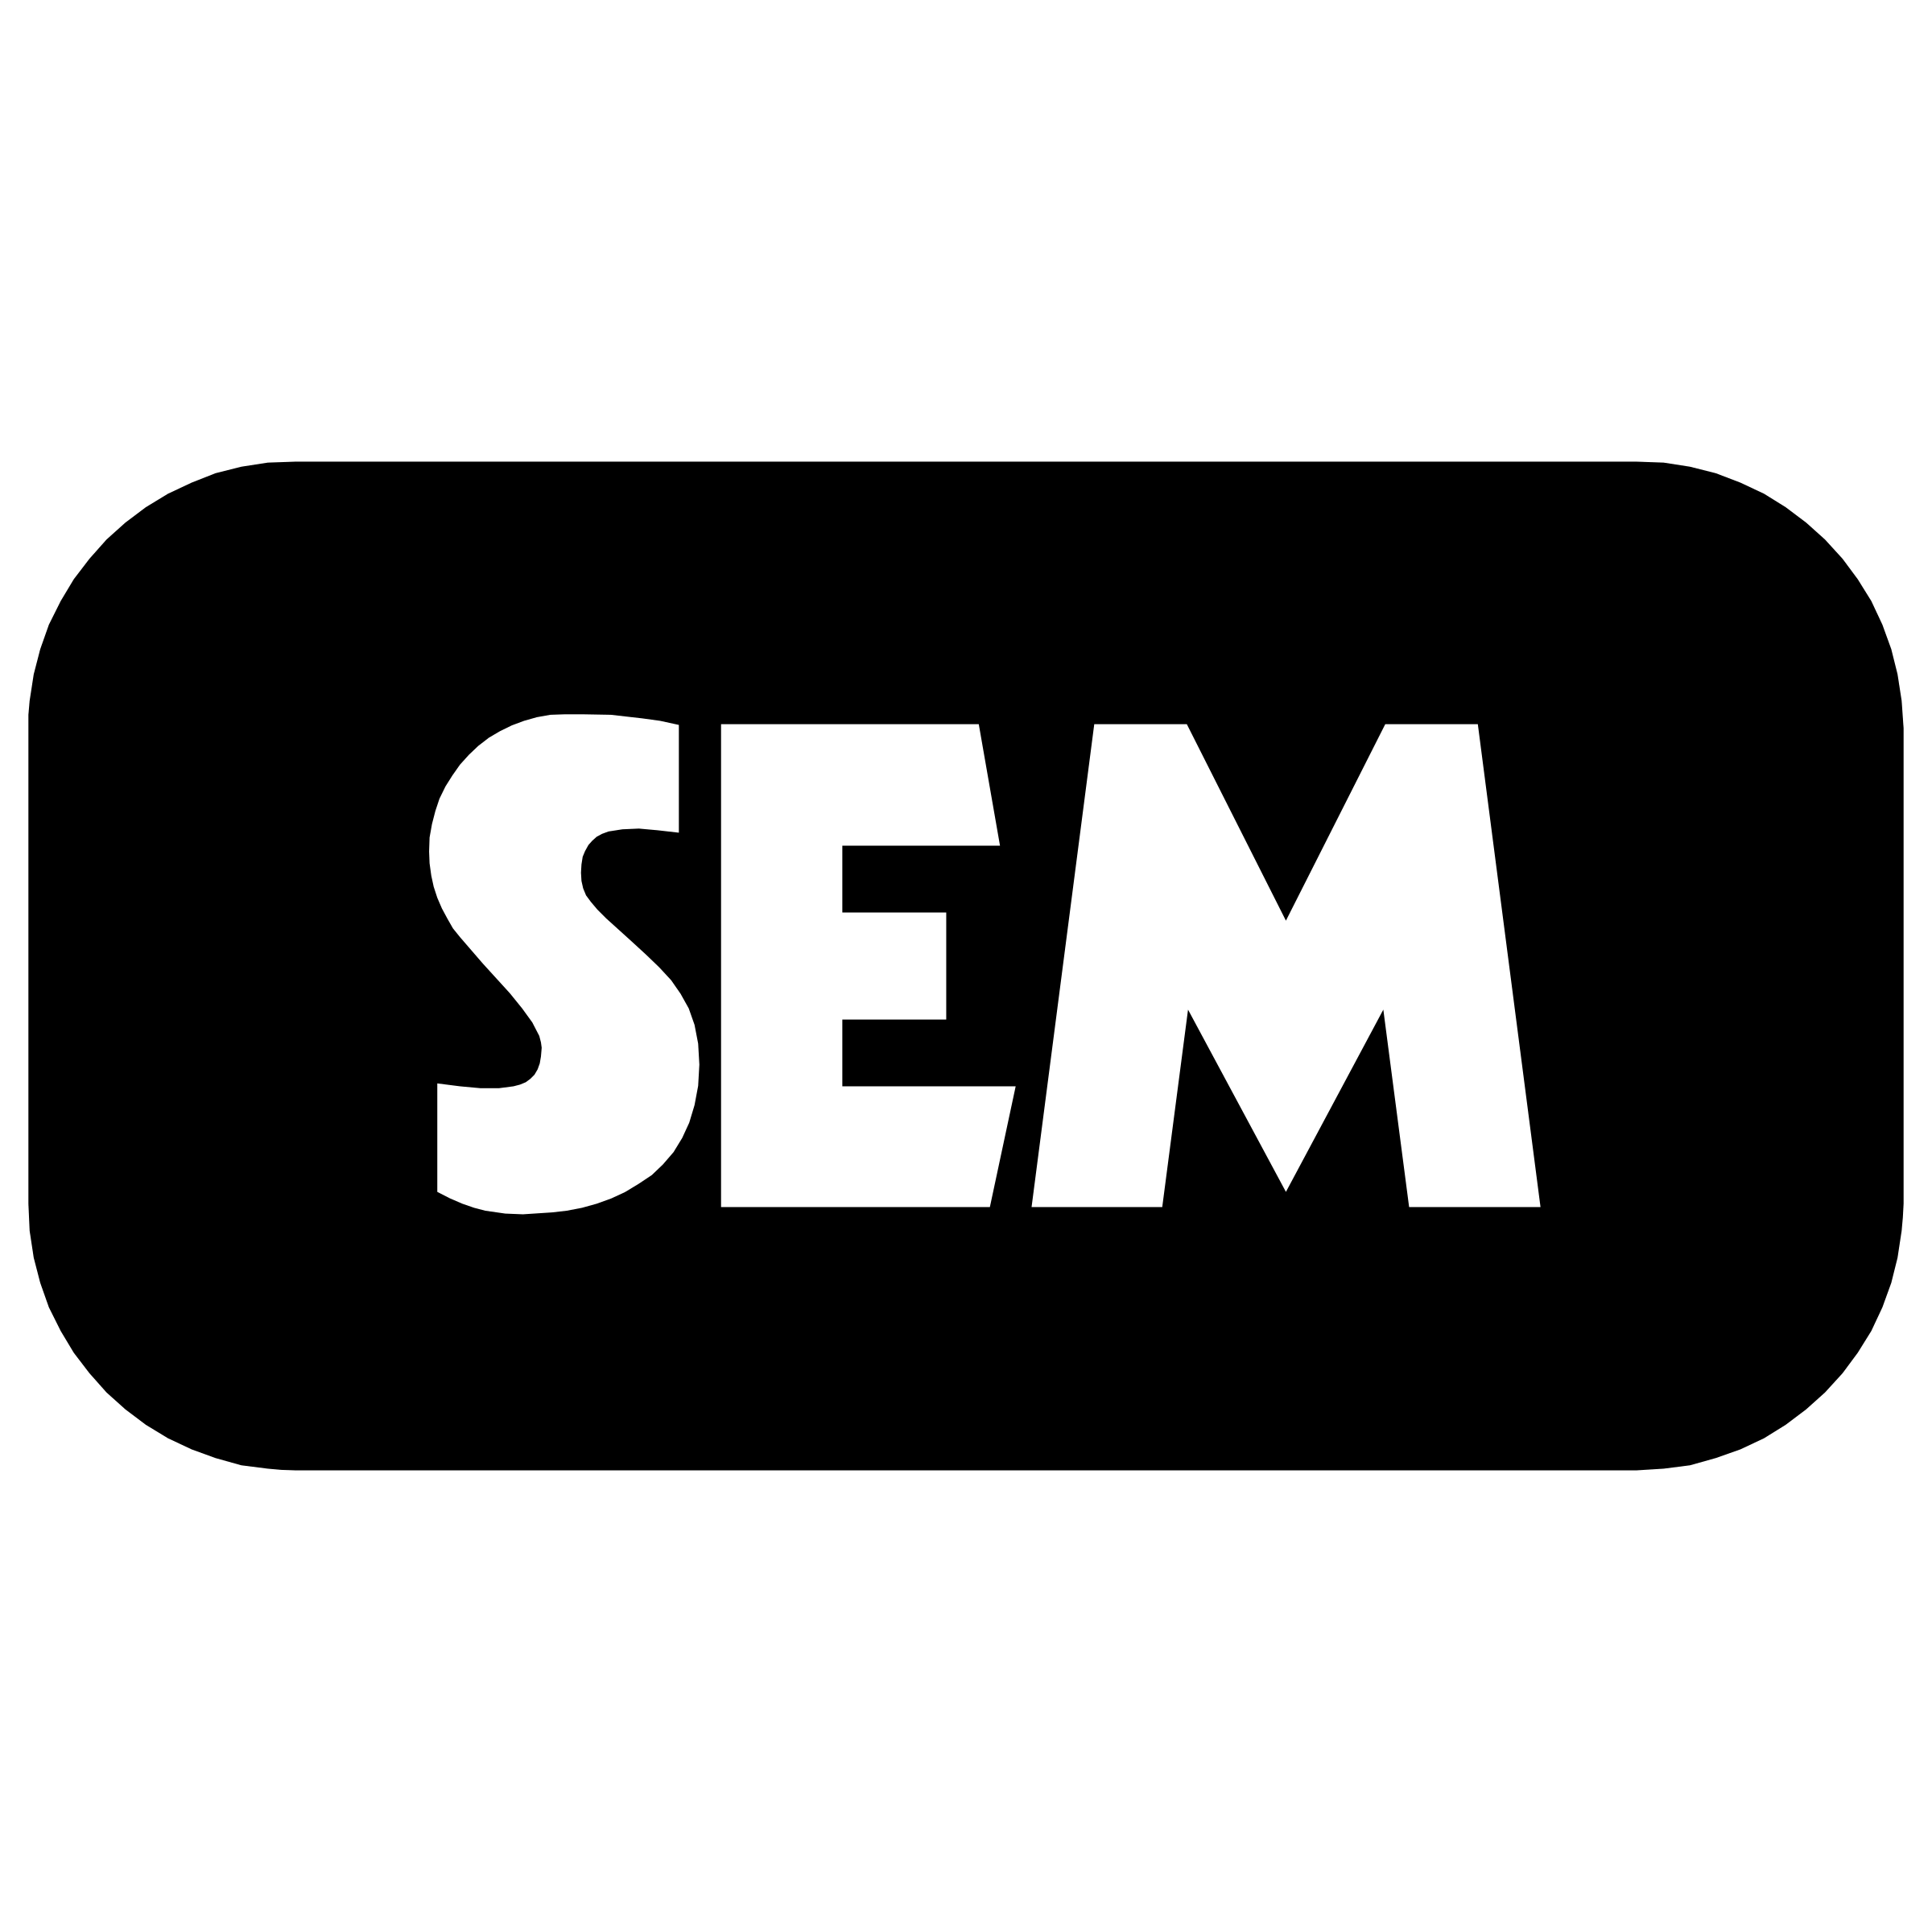 Sem Logo - Sem Logo PNG Transparent & SVG Vector - Freebie Supply